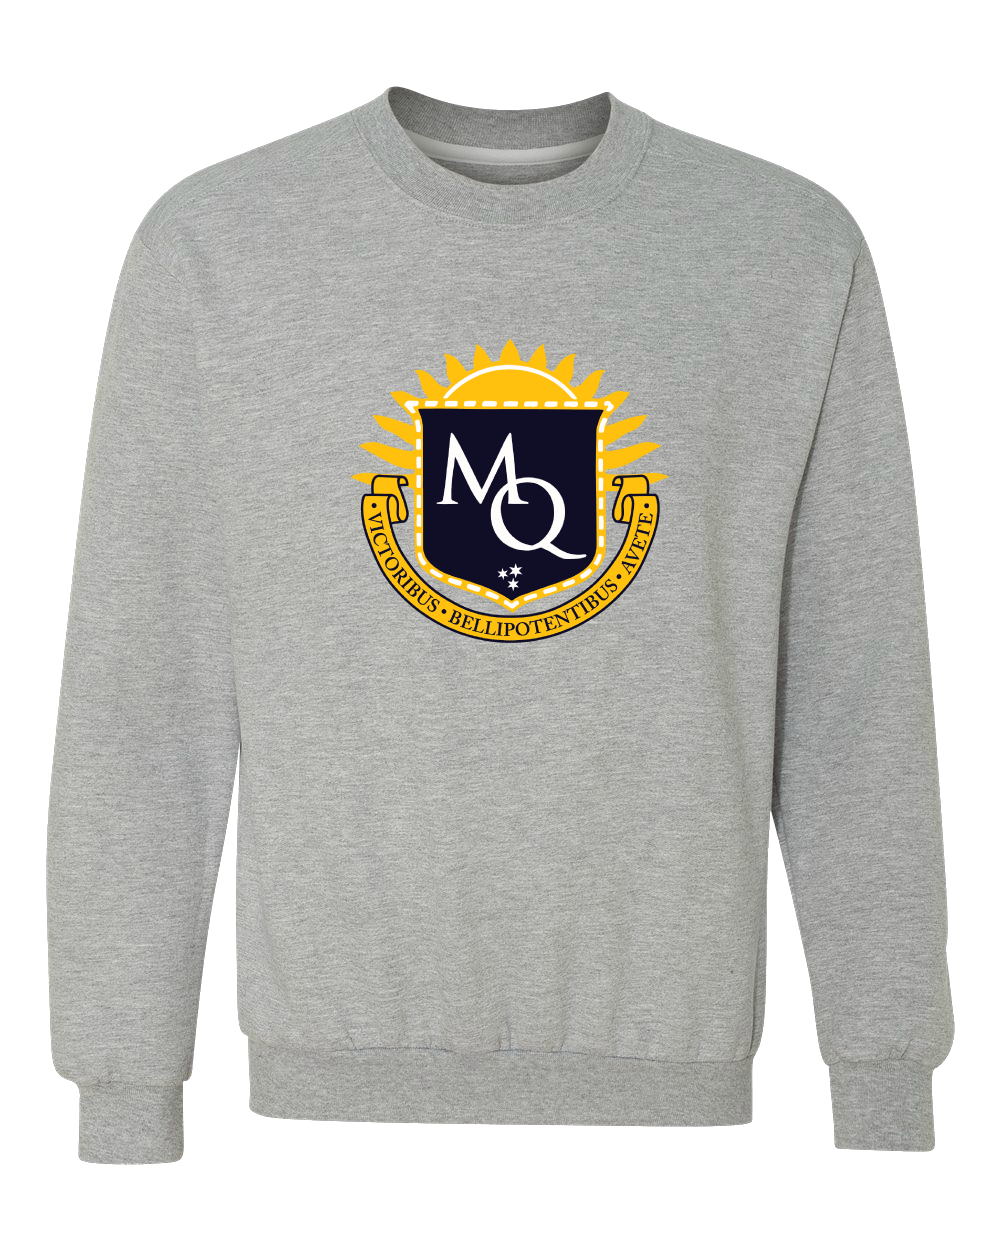 Crewneck Sweatshirt Grey Michigan Quidditch Logo Crewneck sweatshirt